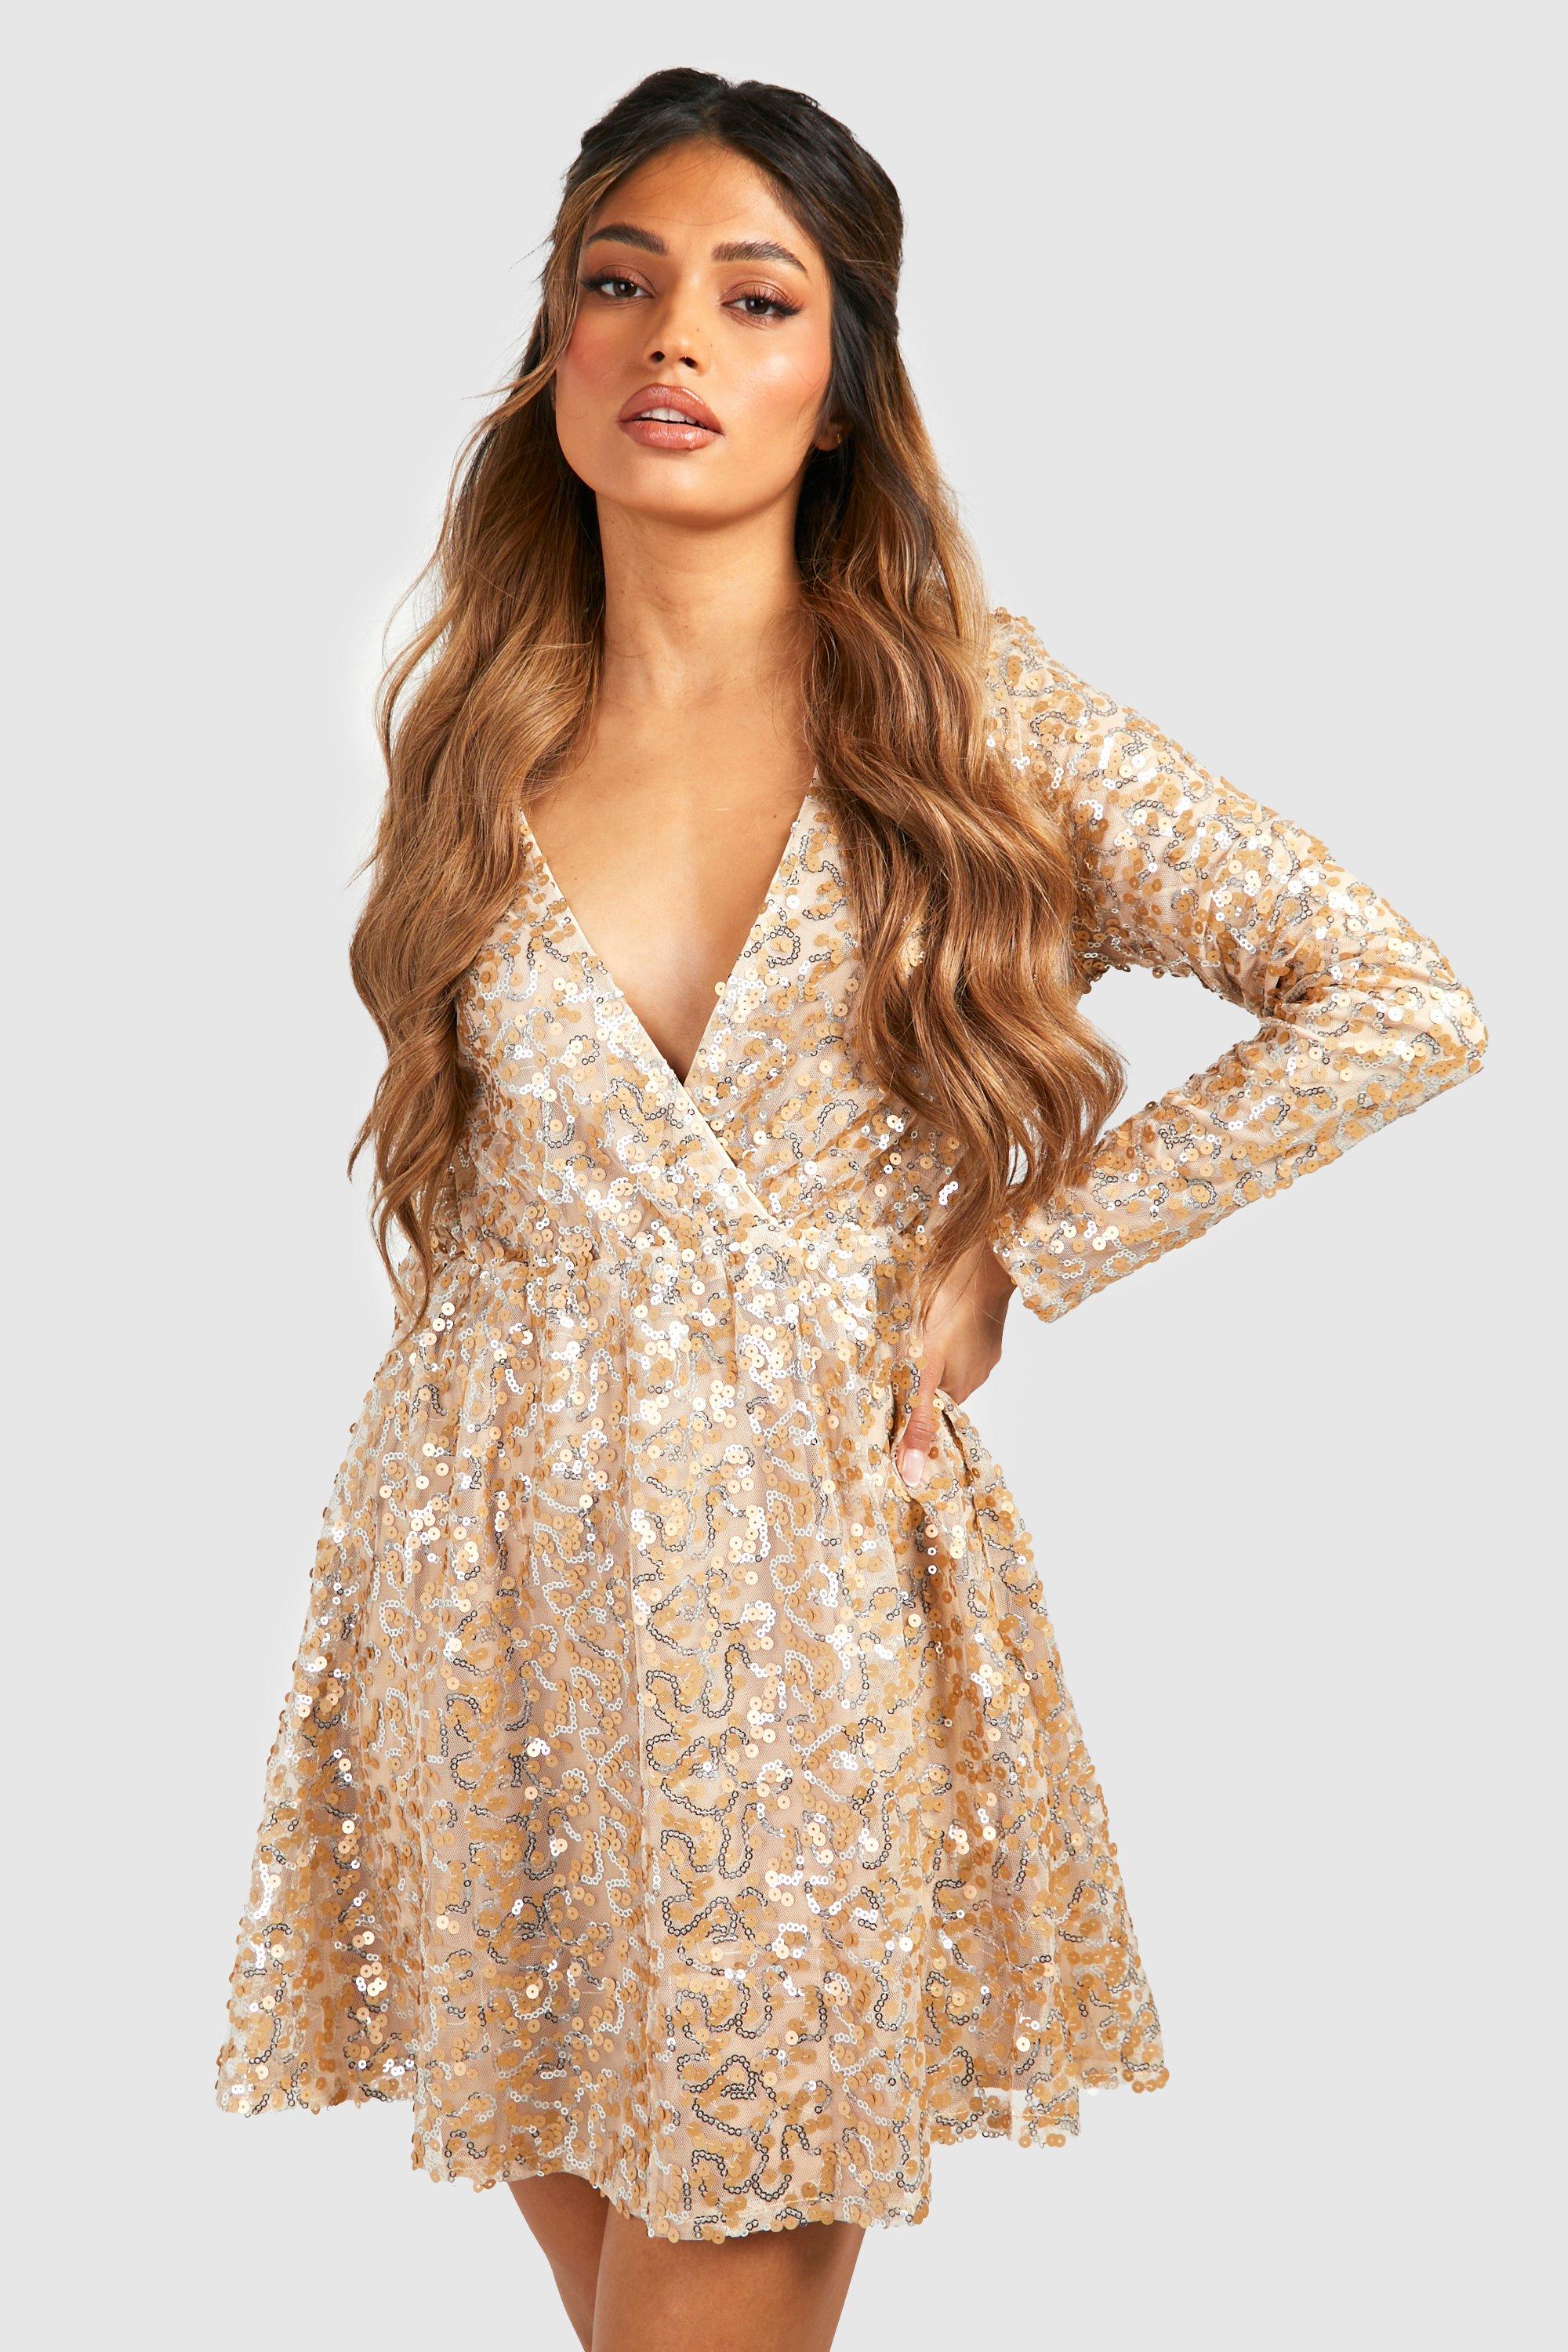 gold cocktail dress